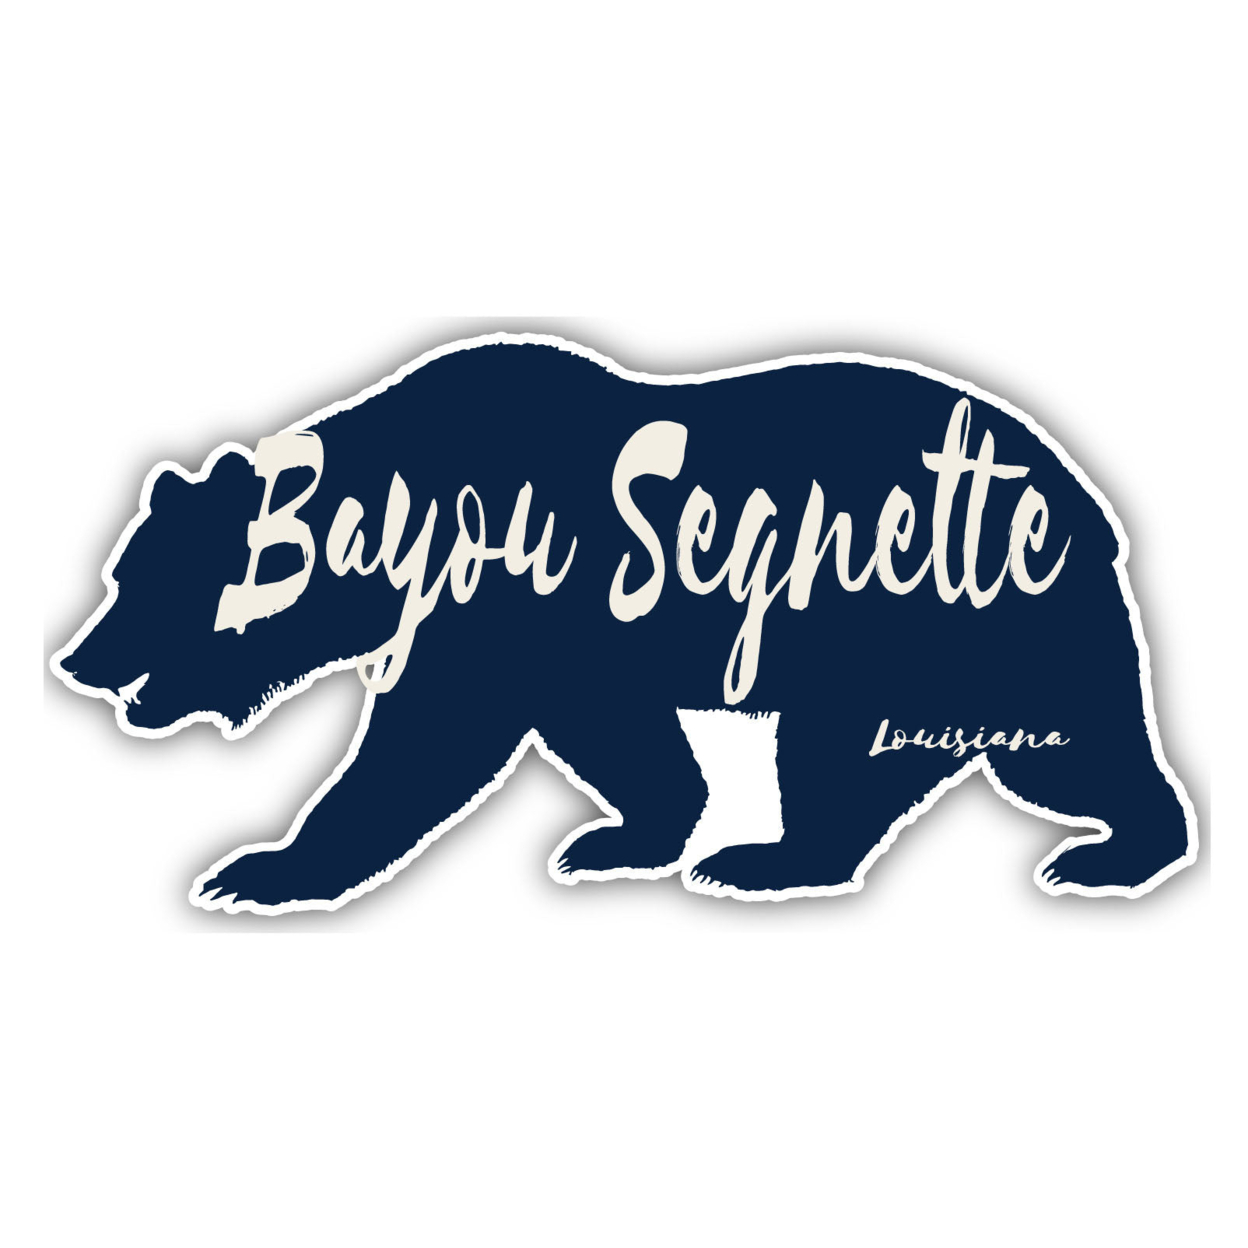 Bayou Segnette Louisiana Souvenir Decorative Stickers (Choose Theme And Size) - Single Unit, 6-Inch, Bear